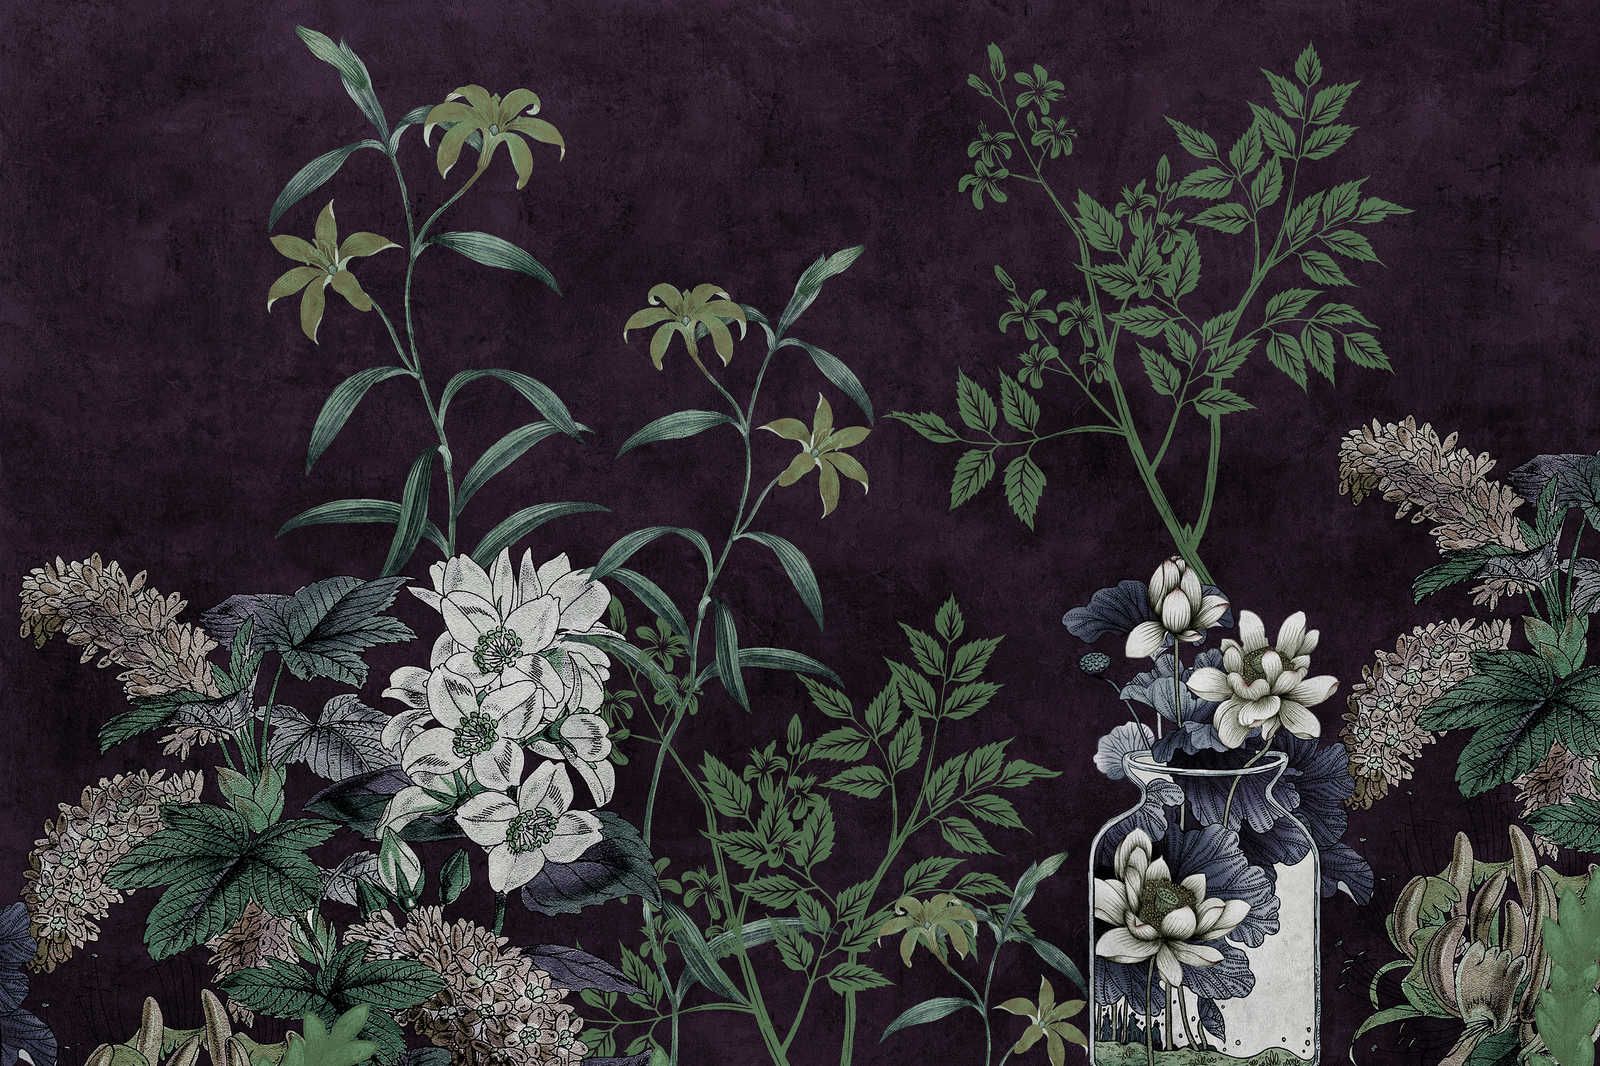             Dark Room 1 - Black Canvas Painting Botanical Pattern Green - 0.90 m x 0.60 m
        